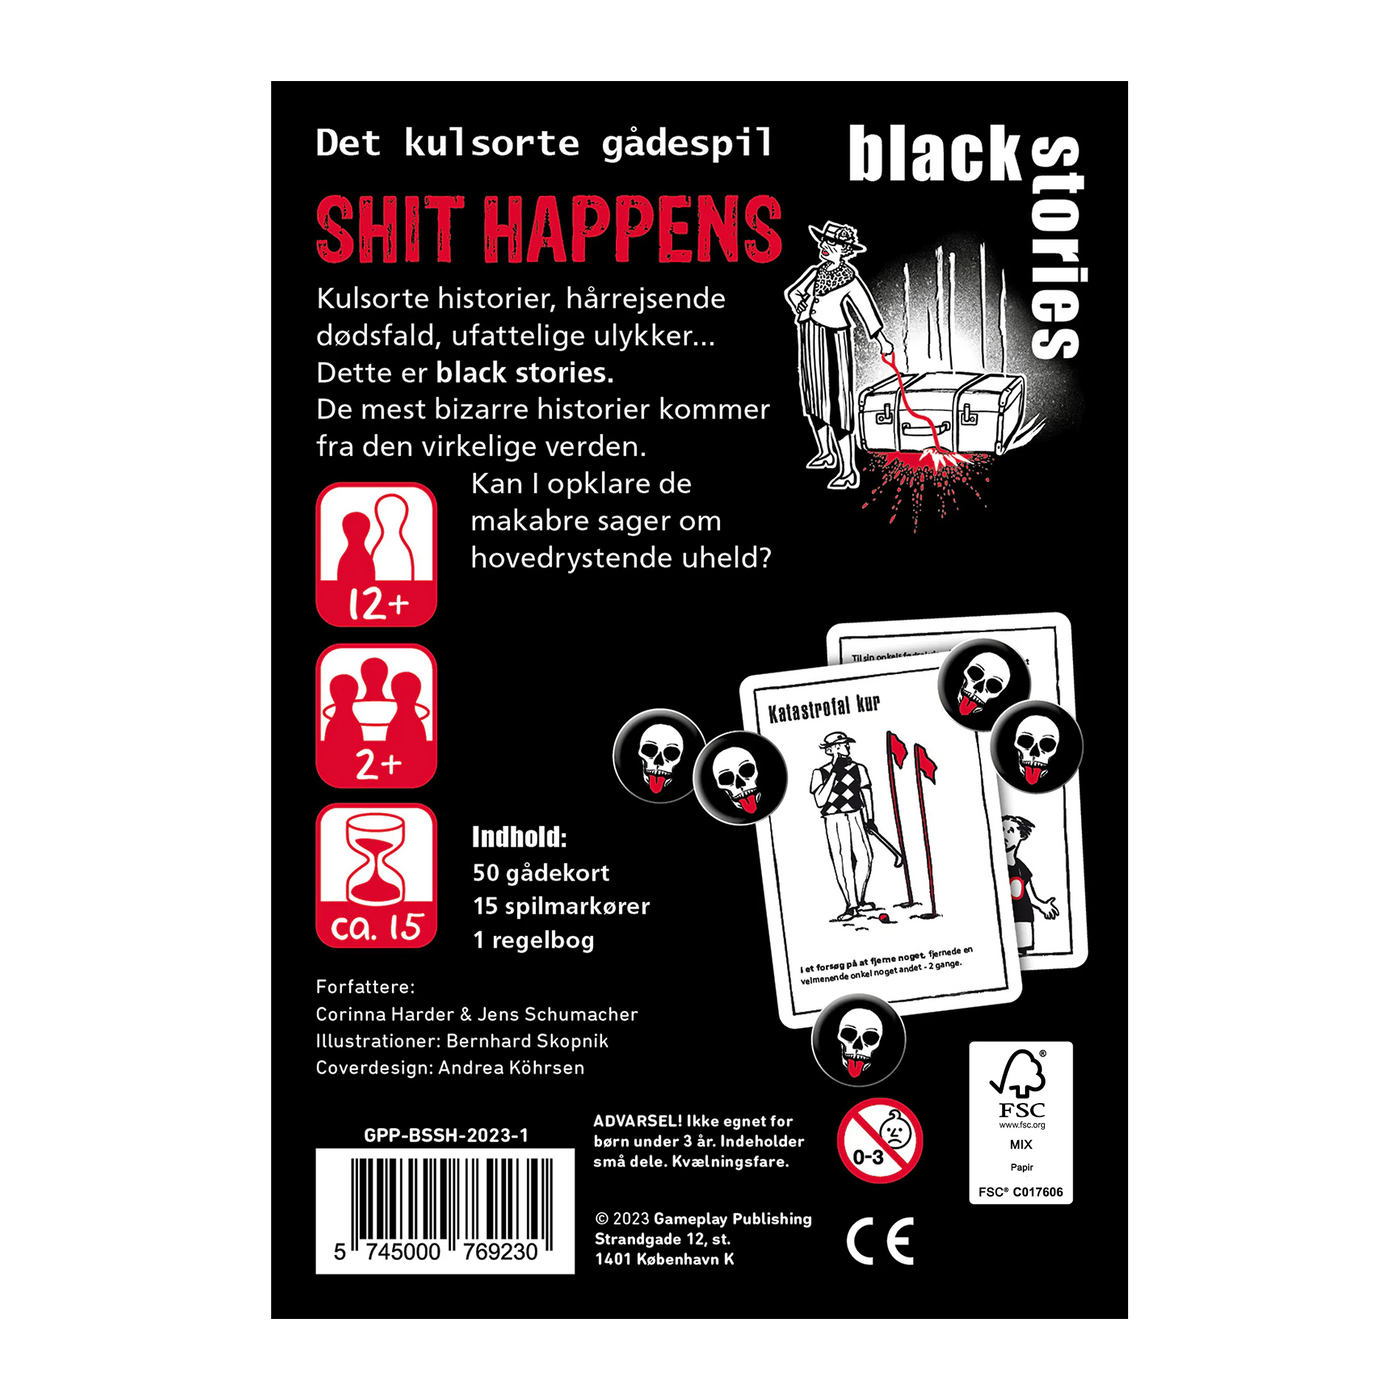 Black Stories - Shit Happens (Dansk)